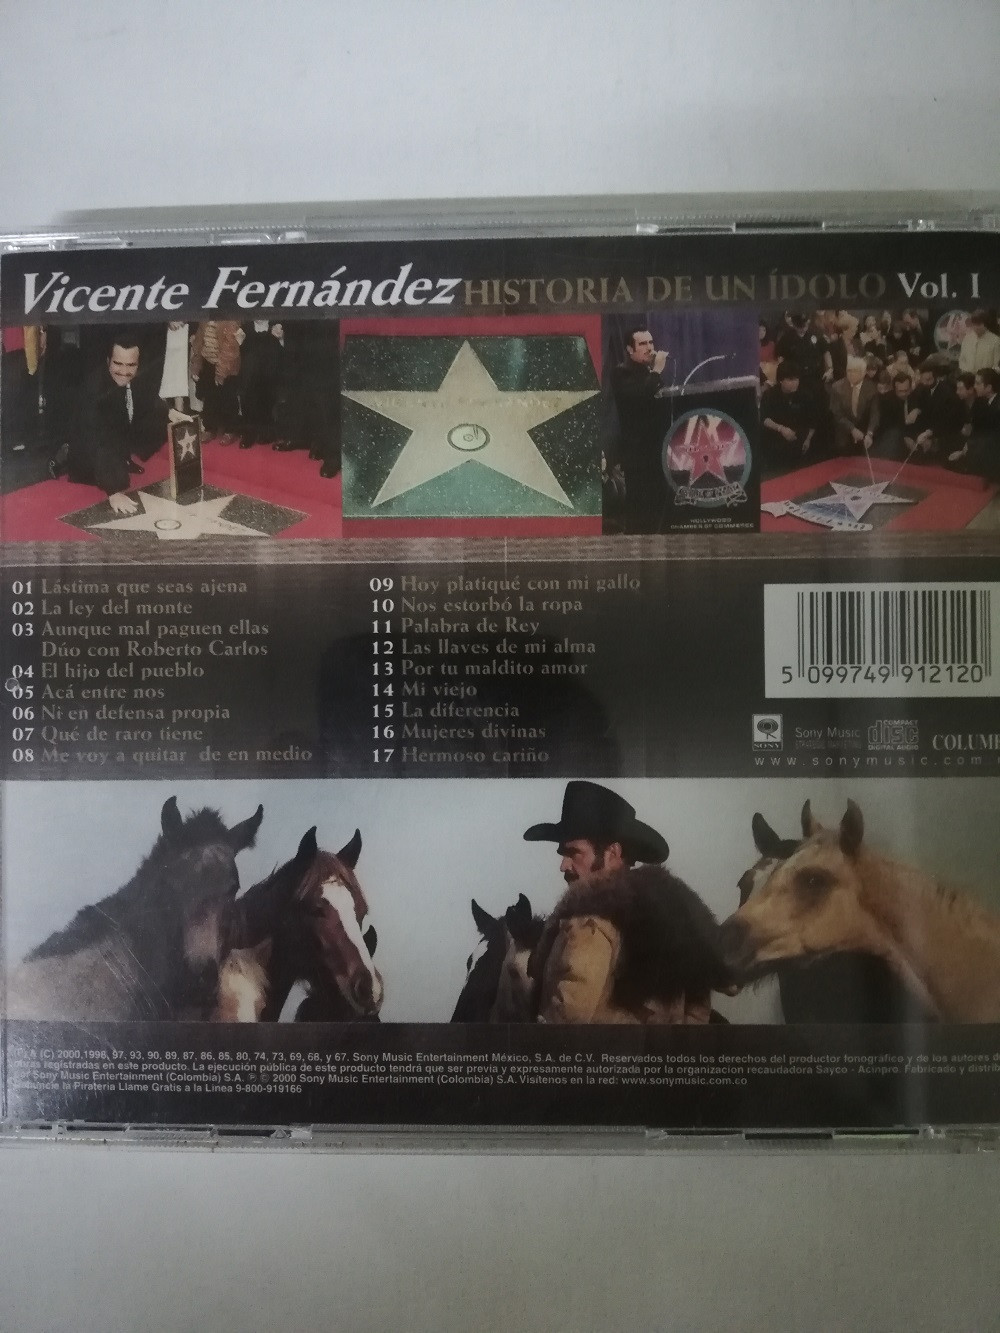 Imagen CD VICENTE FERNANDEZ - HISTORIA DE UN IDOLO VOL. 1 2